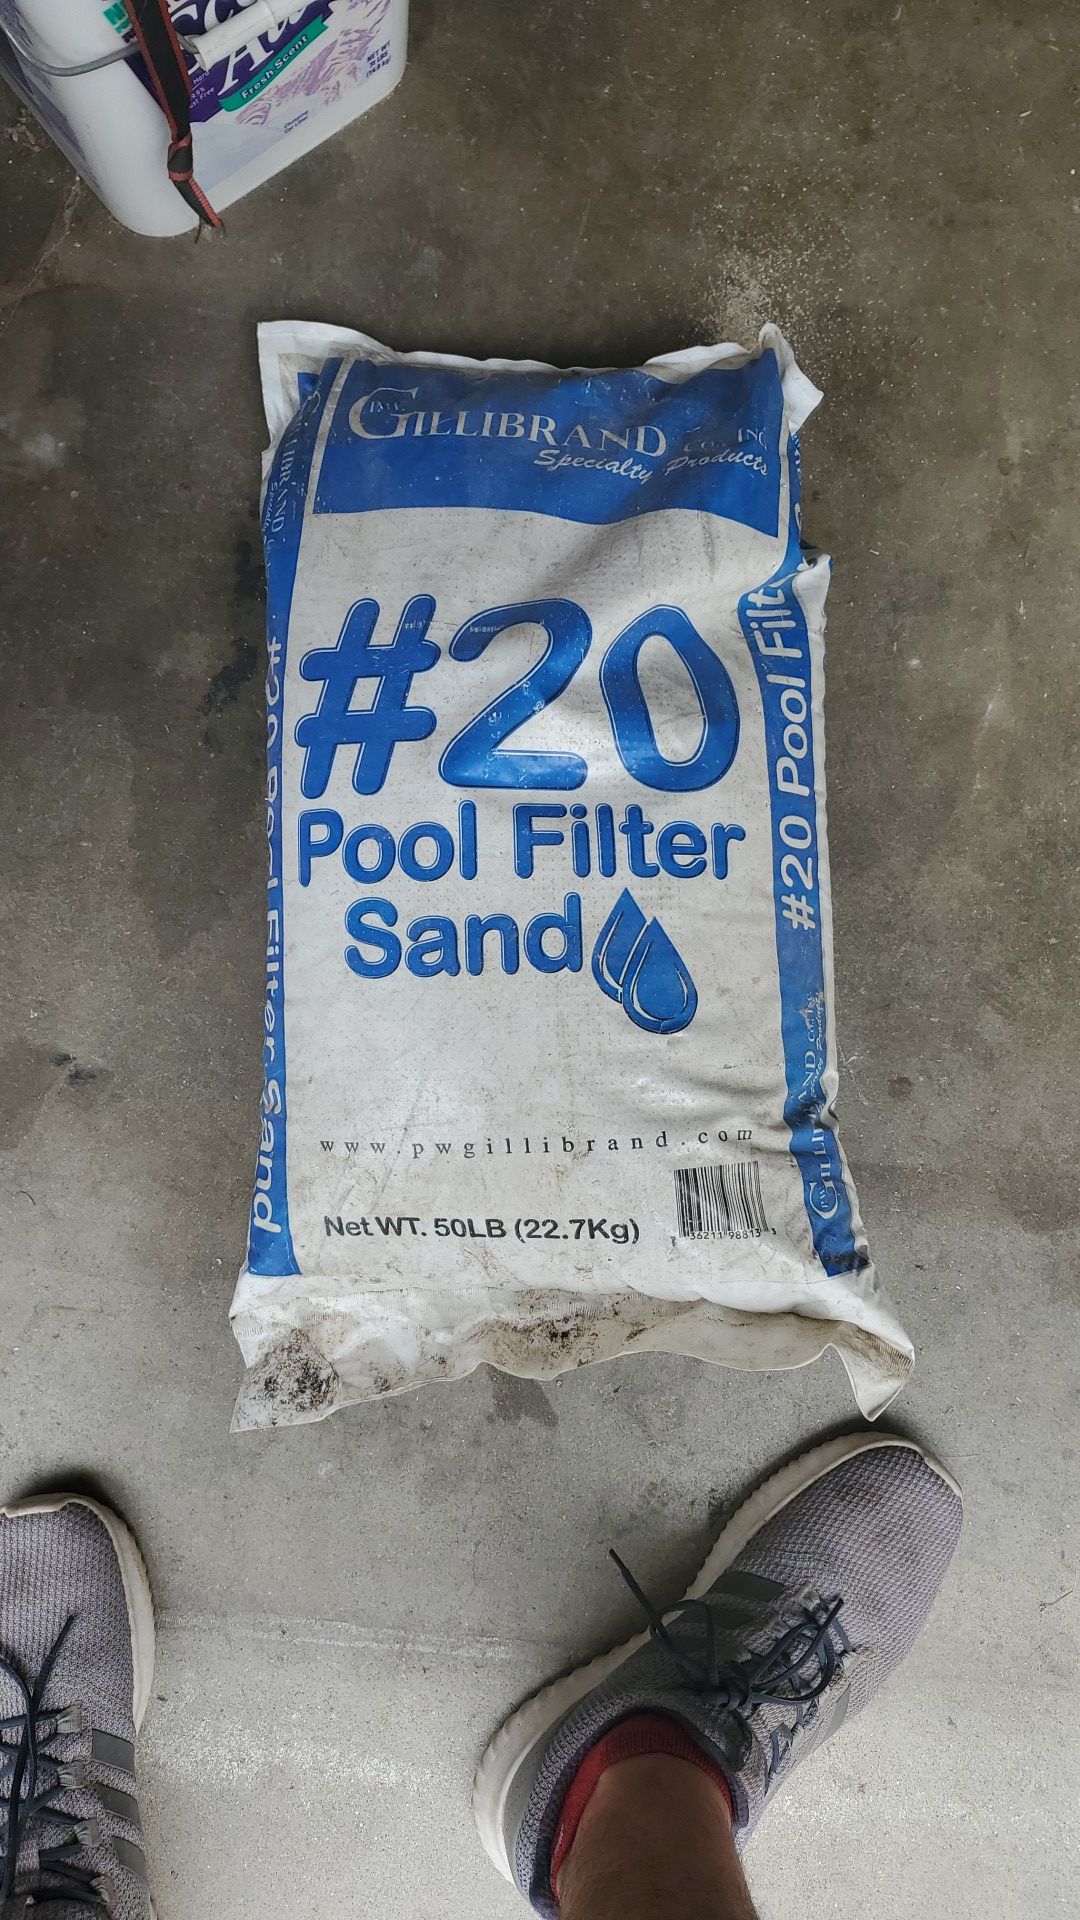 Pool filter sand